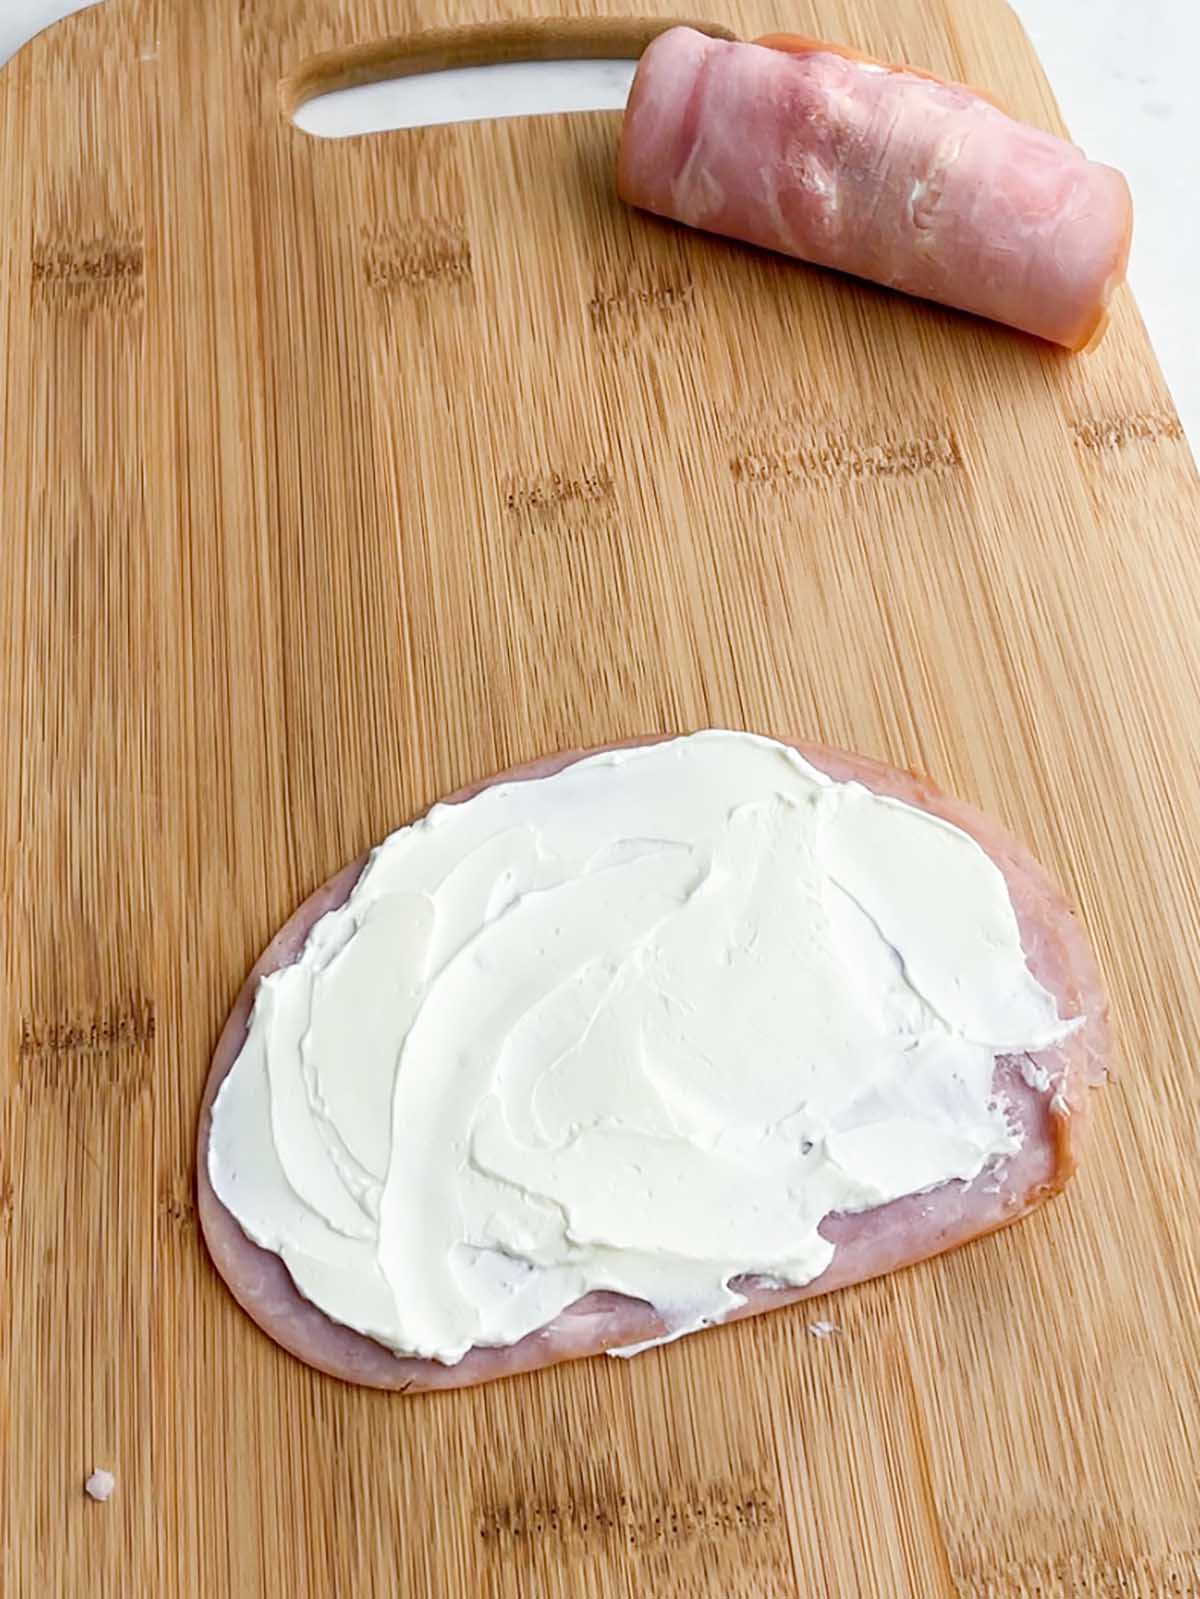 cream cheese spread on a slice of ham